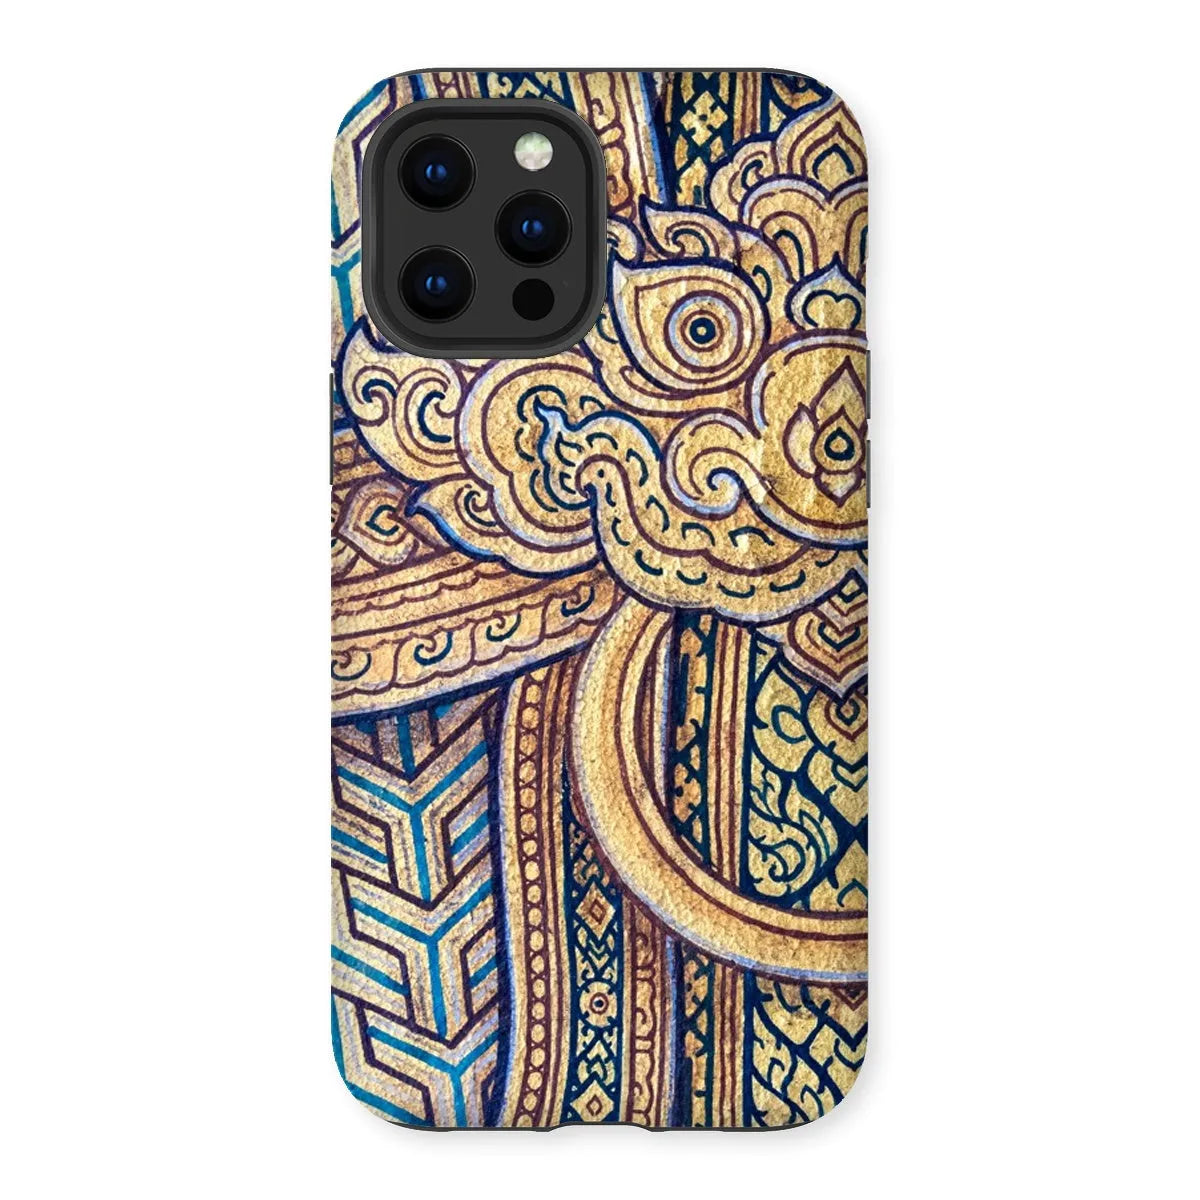 Man’s Best Friend - Thai Aesthetic Art Phone Case - Iphone 12 Pro Max / Matte - Mobile Phone Cases - Aesthetic Art